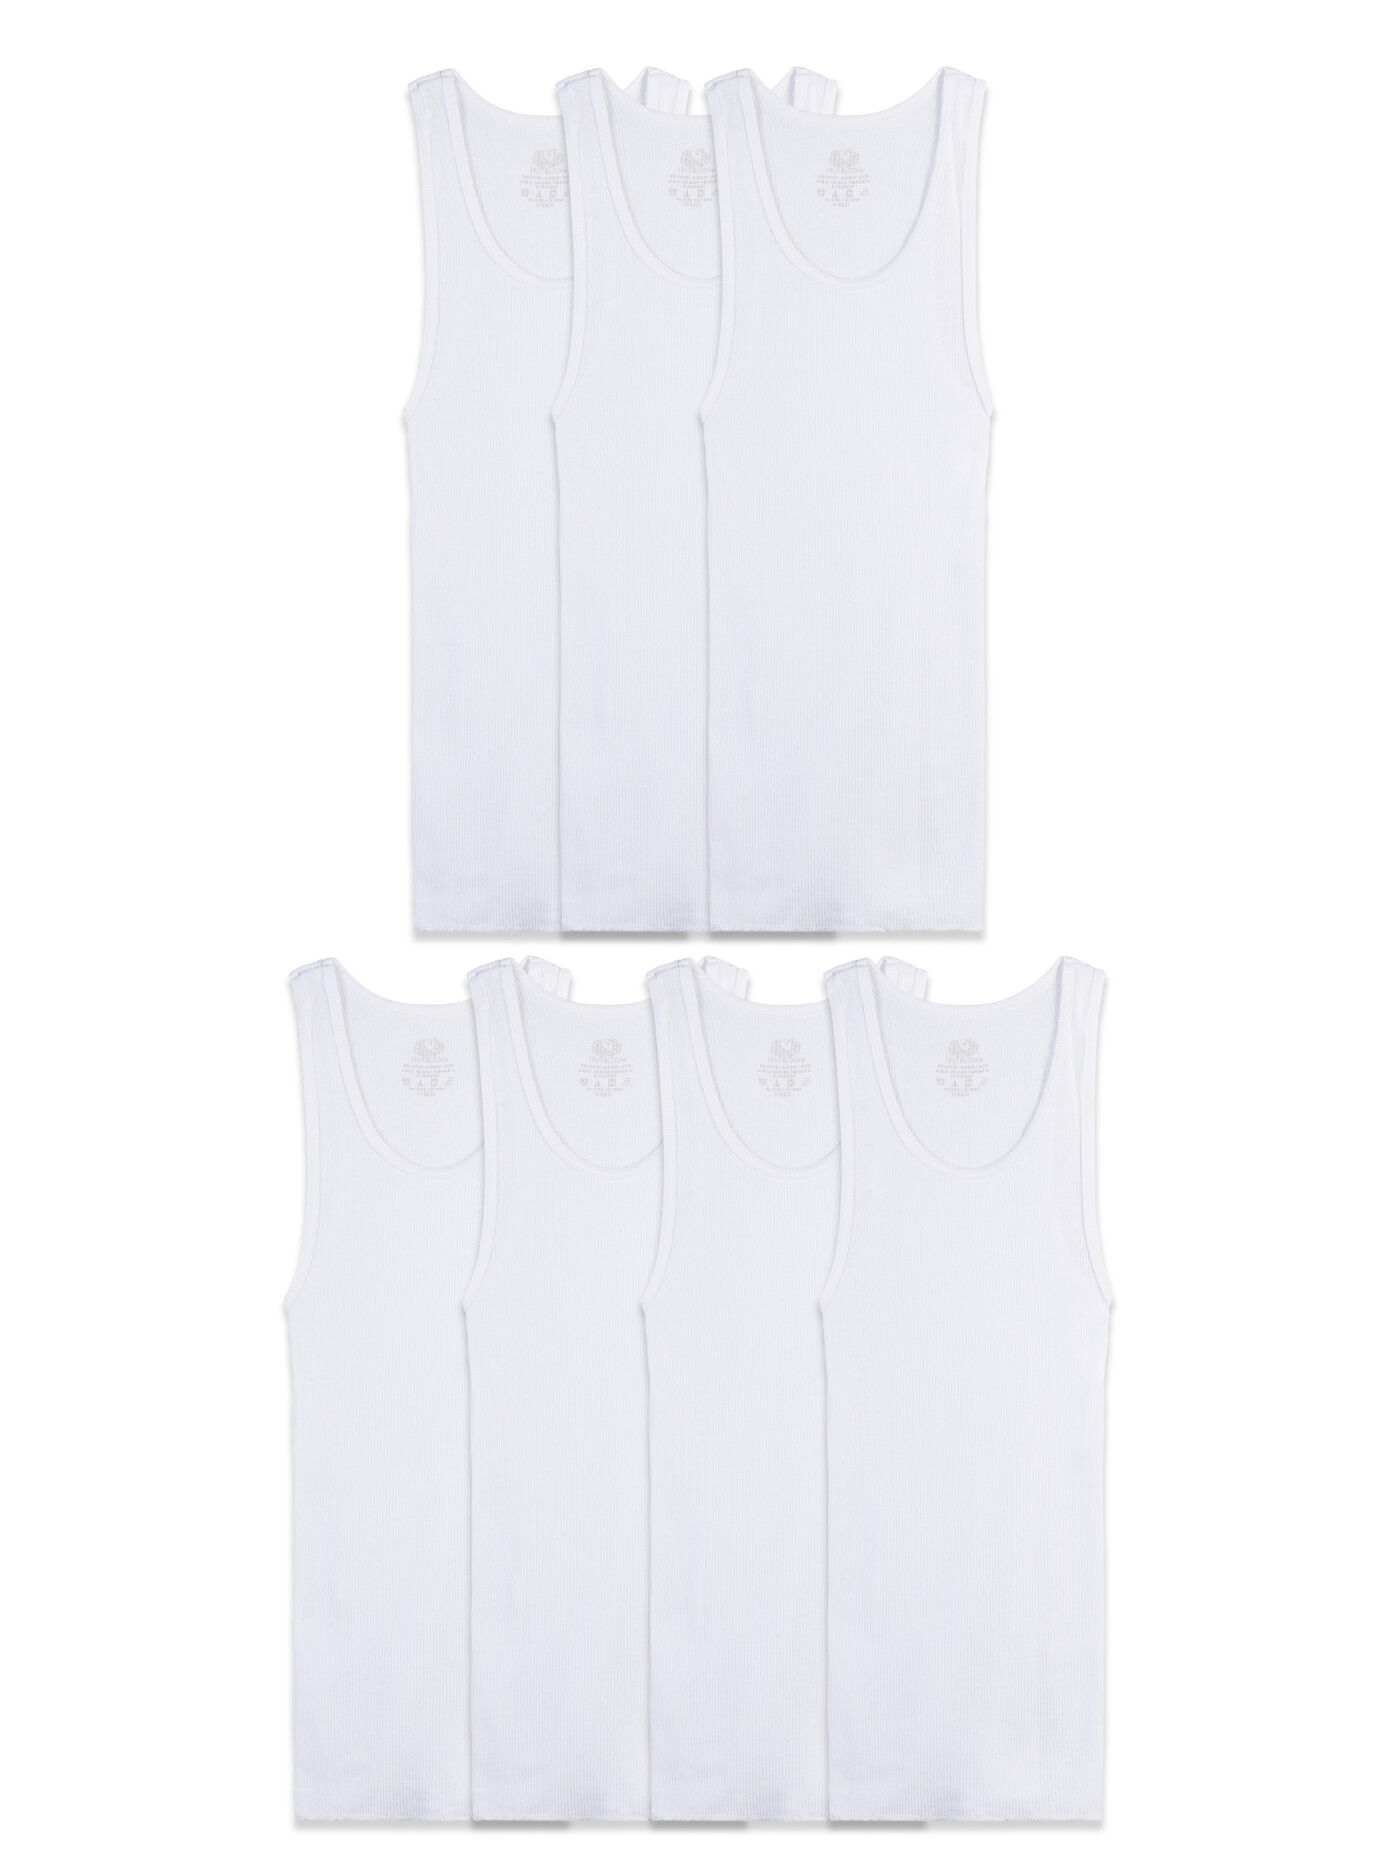 BOOPH 3 Pack White Boys Tank Top Sleeveless Shirt Undershirt for Little Boy